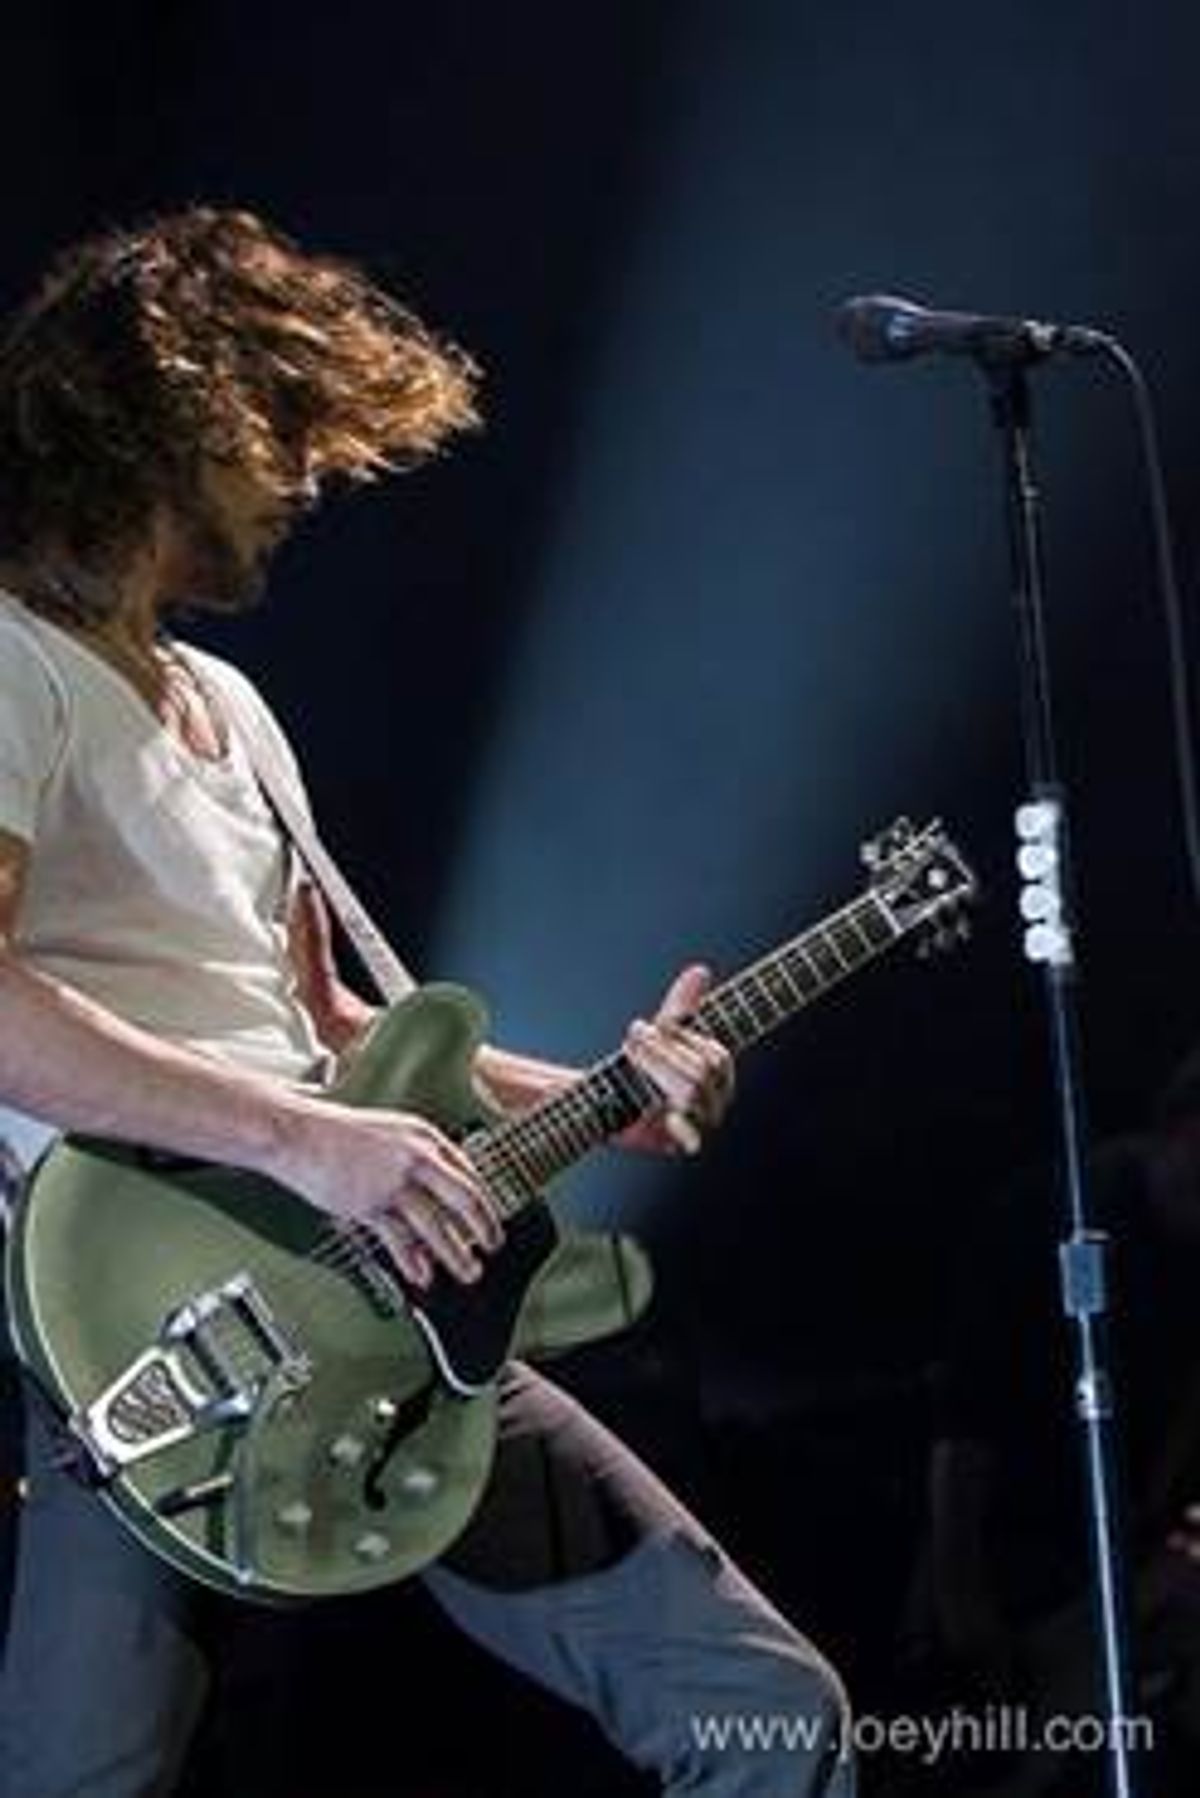 Gibson Announces Partnership With Chris Cornell of Soundgarden